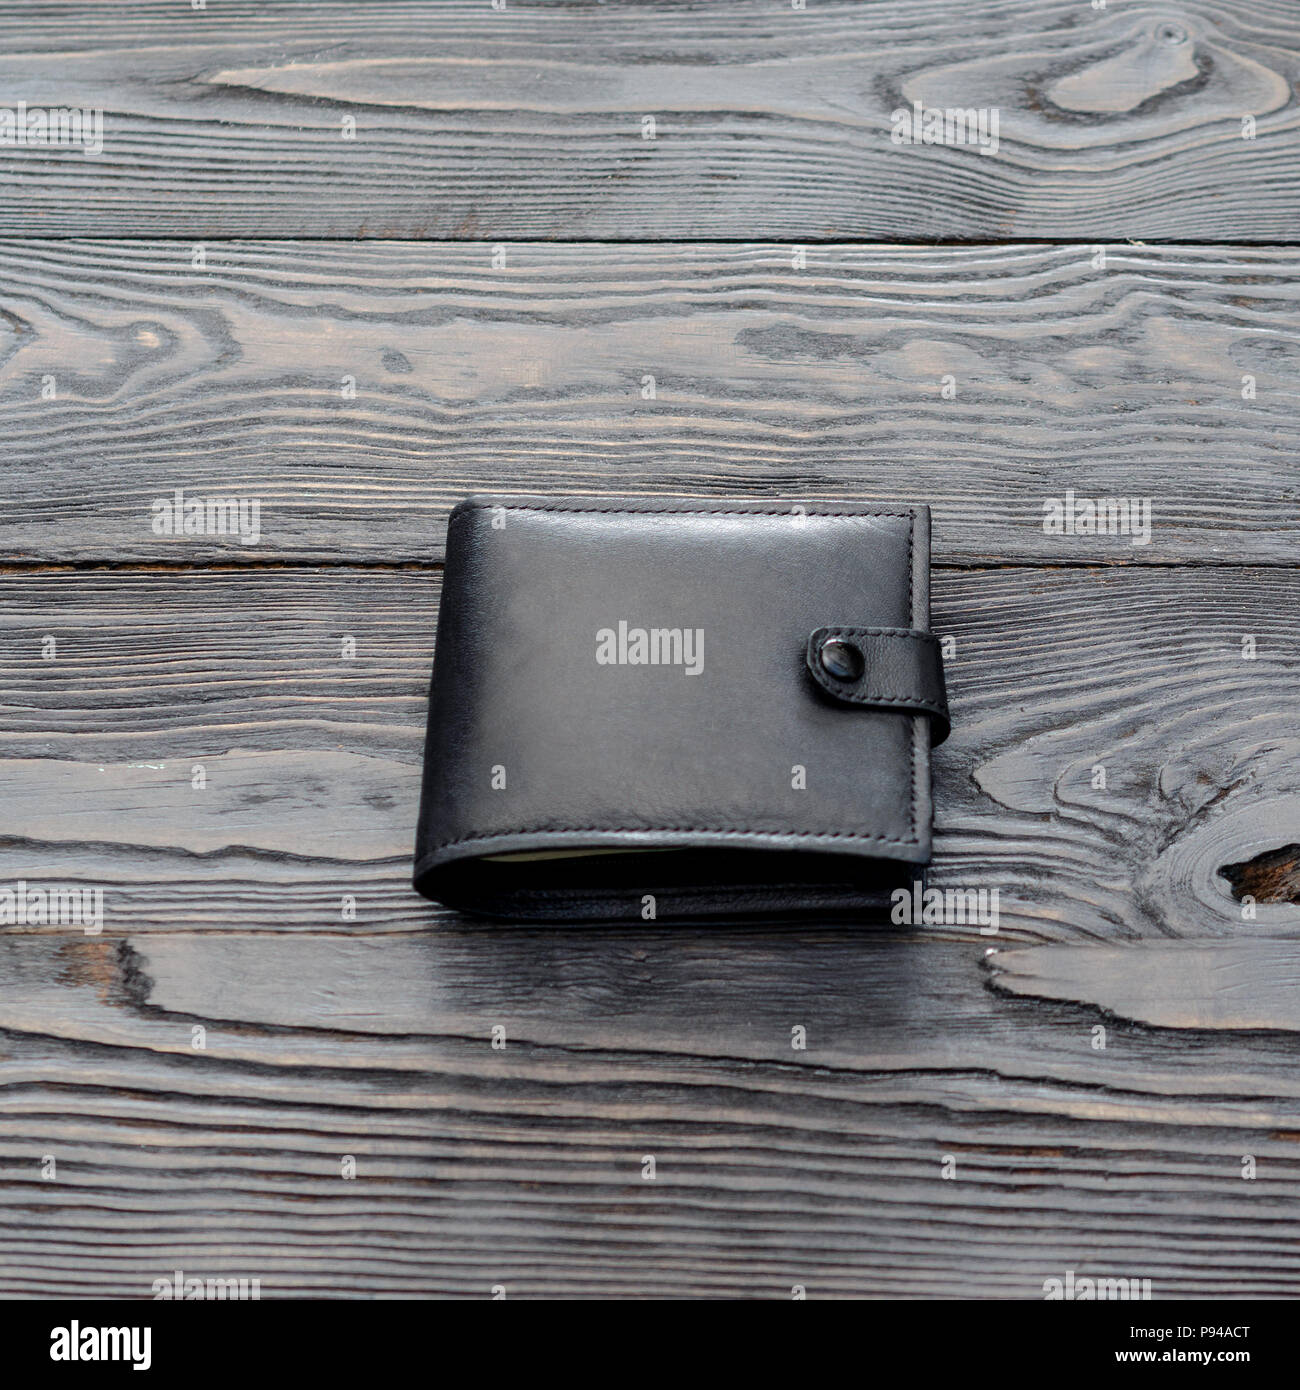 Black leather elegance men's wallet on dark wooden background. For instagram format. Square. Single object. Stock Photo